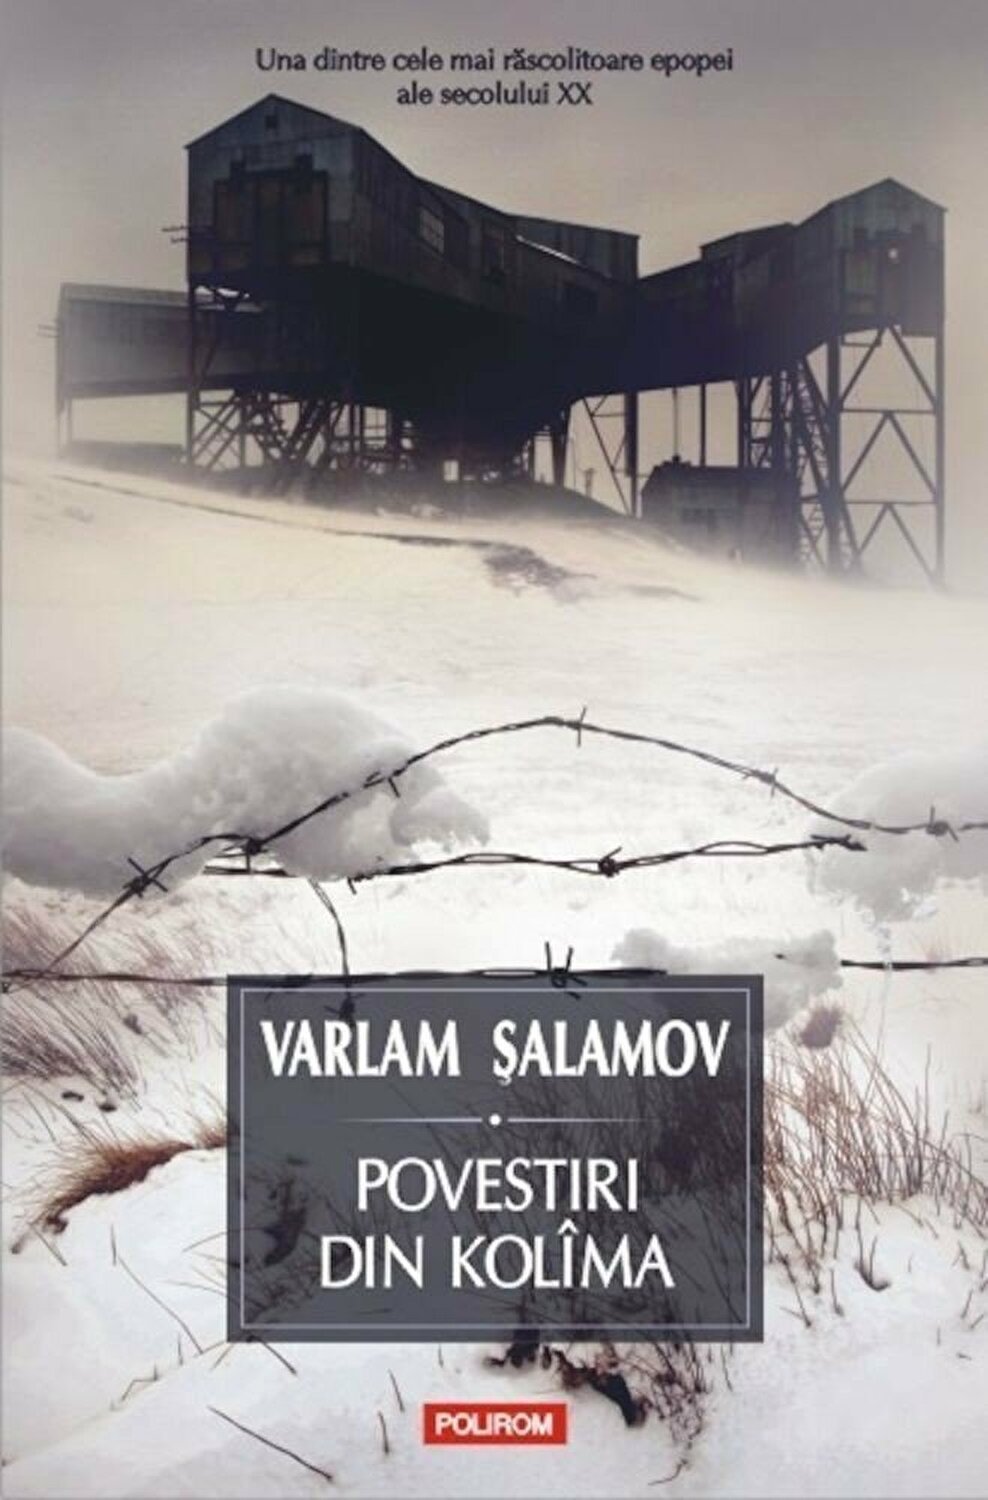 Povestiri din Kolima – Volumul 1 | Varlam Salamov carturesti.ro poza bestsellers.ro